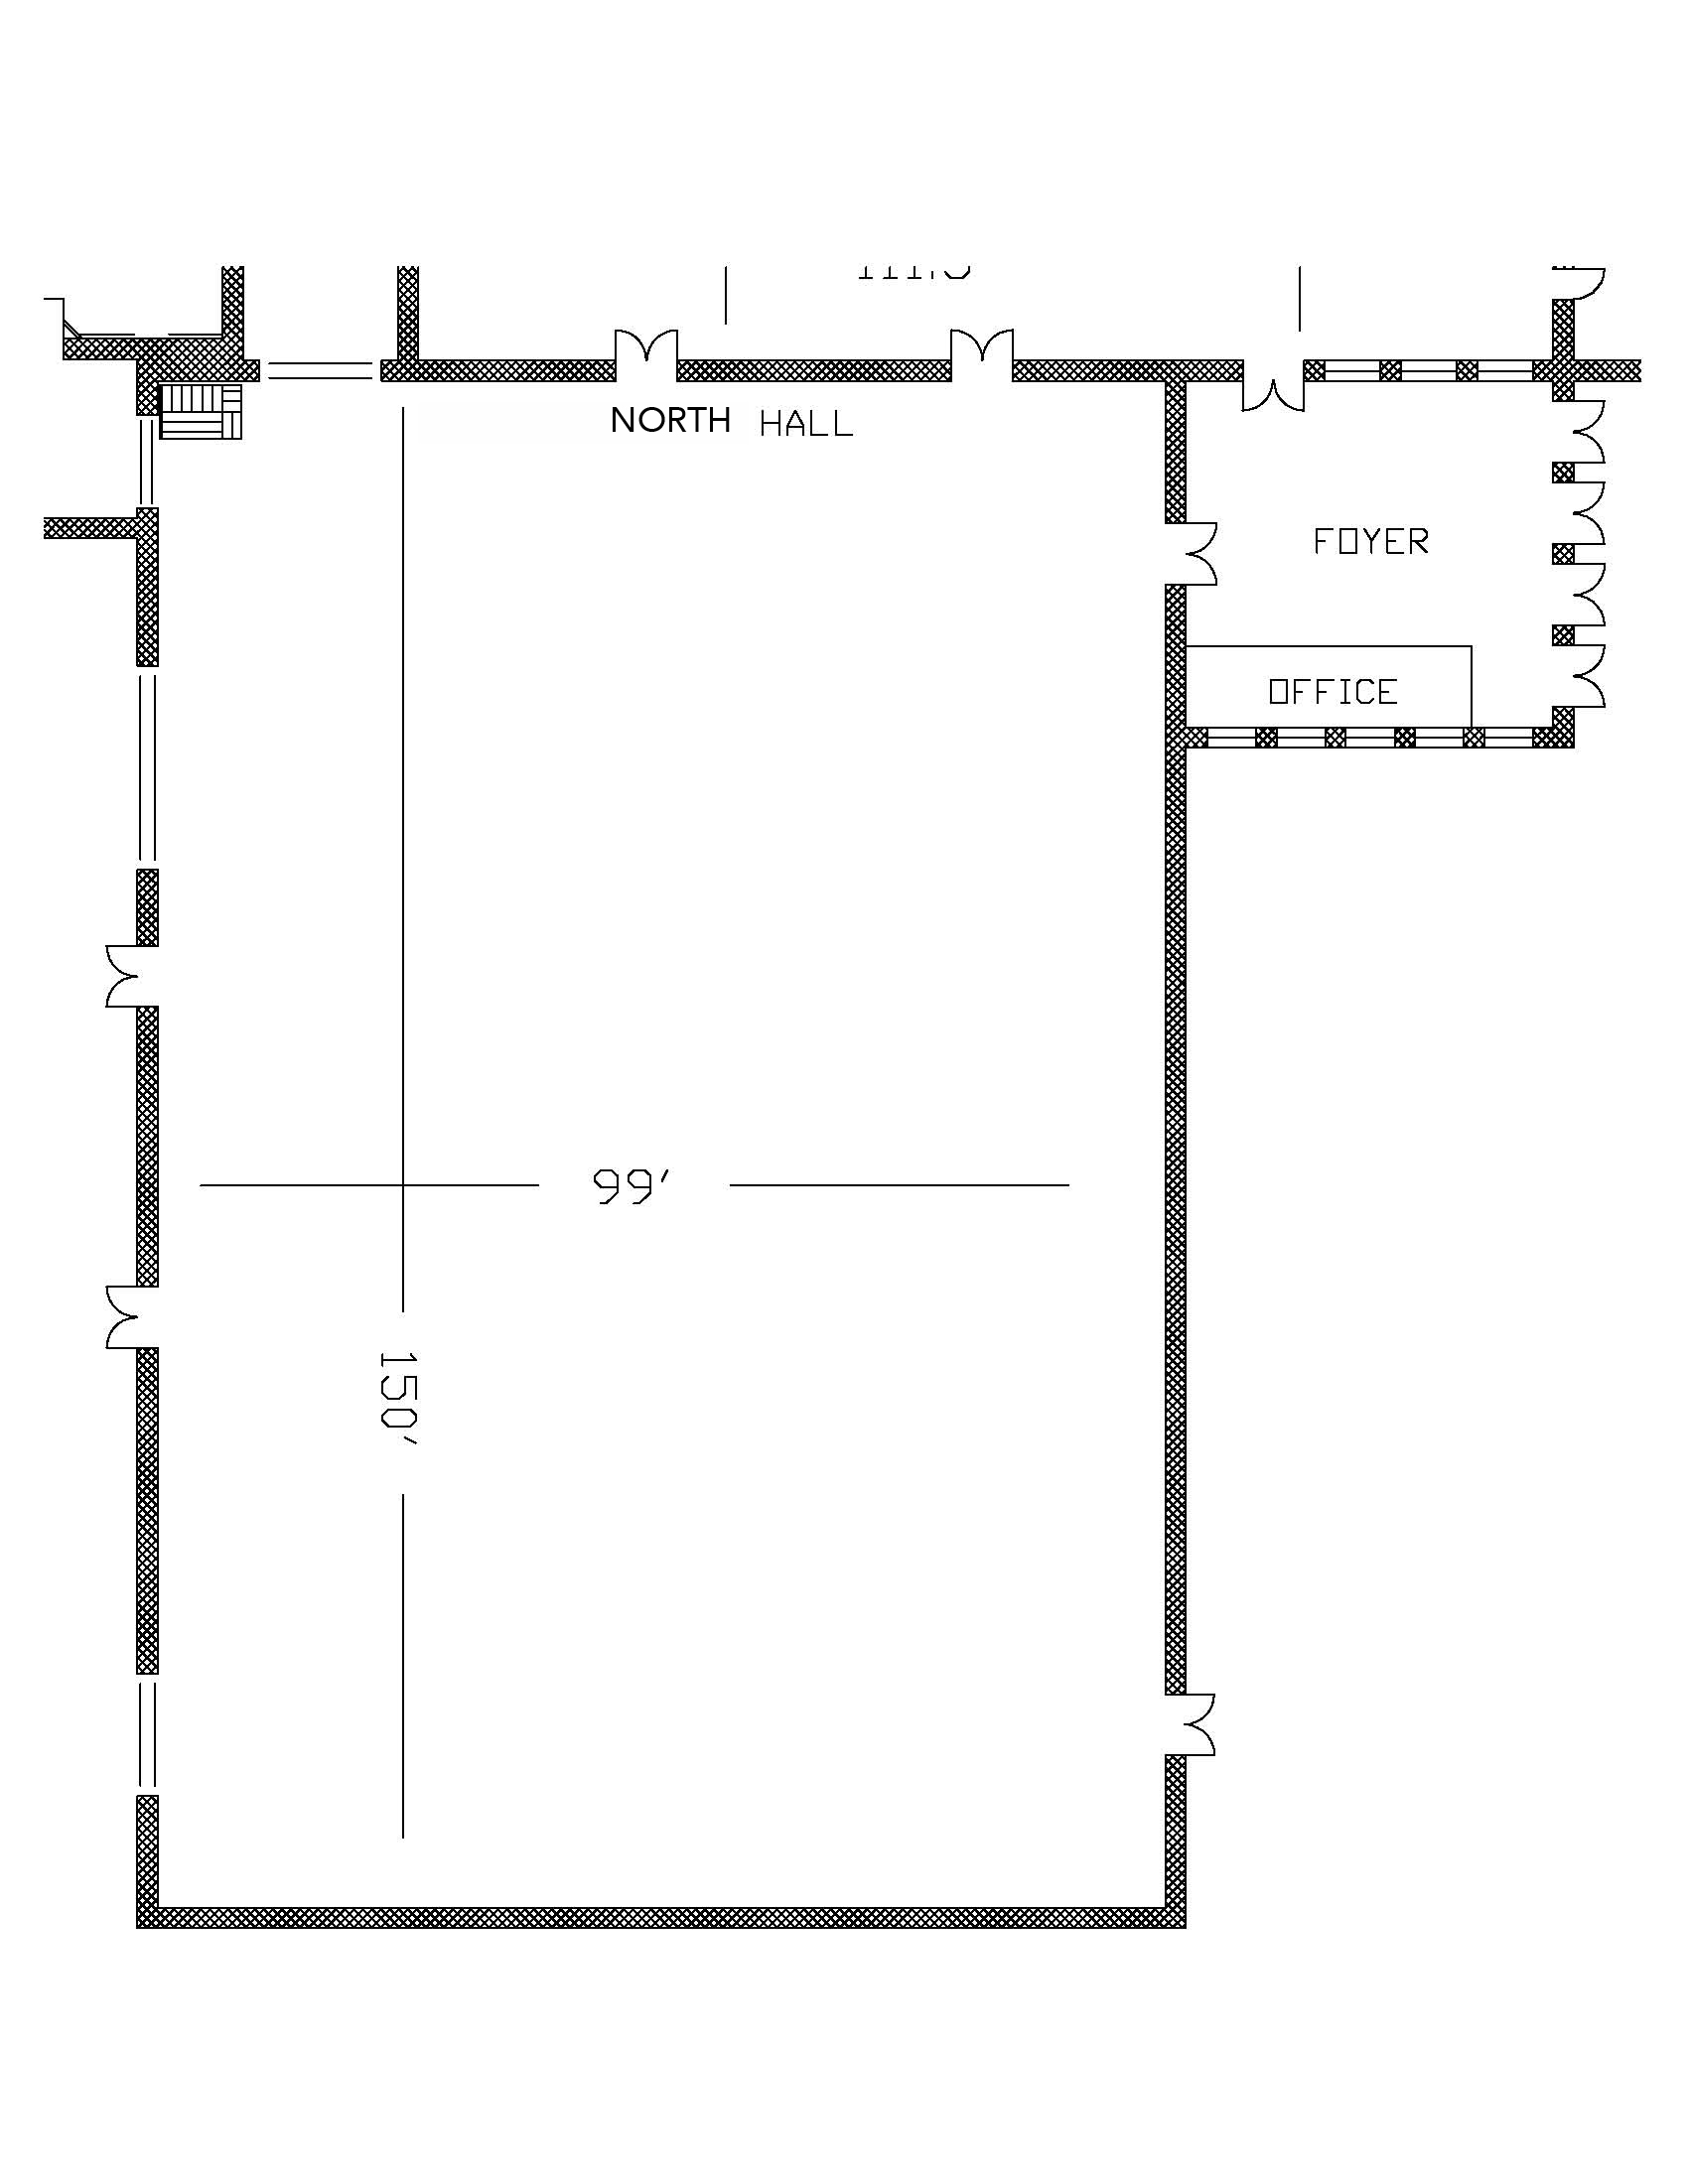 North Hall - Floor Plan